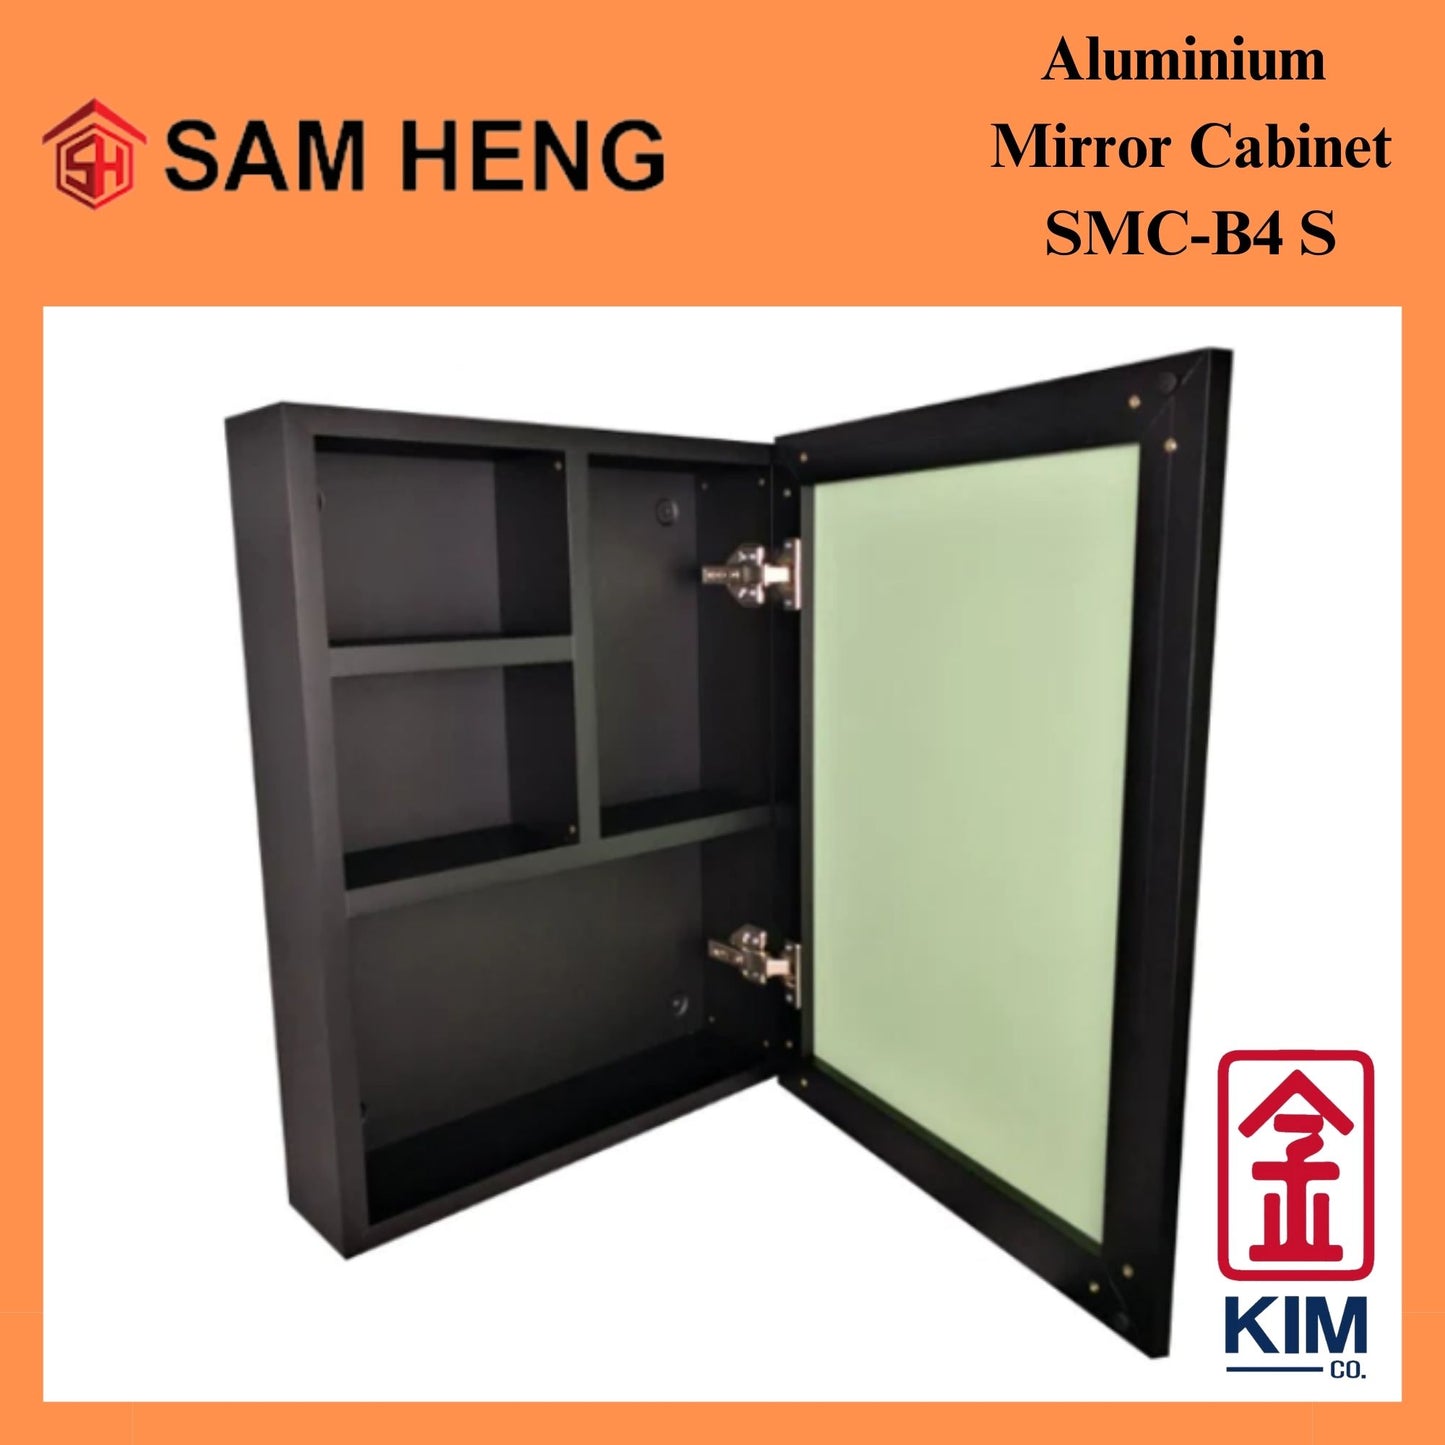 Sam Heng Aluminium Mirror Cabinet (SMC-B4 S)